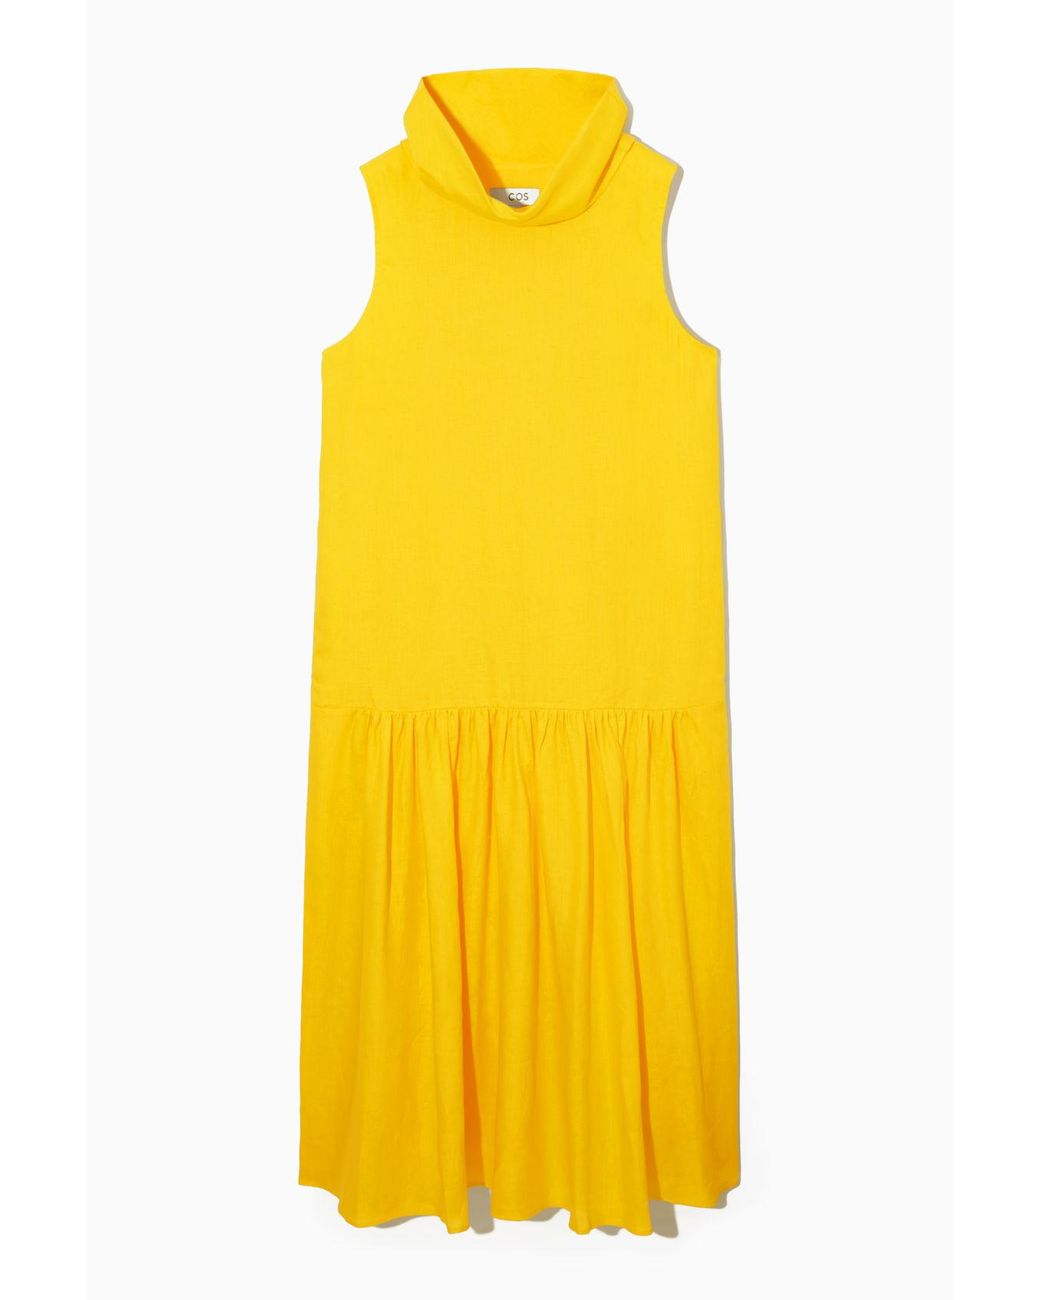 COS Sleeveless High-neck Linen Dress in Yellow | Lyst